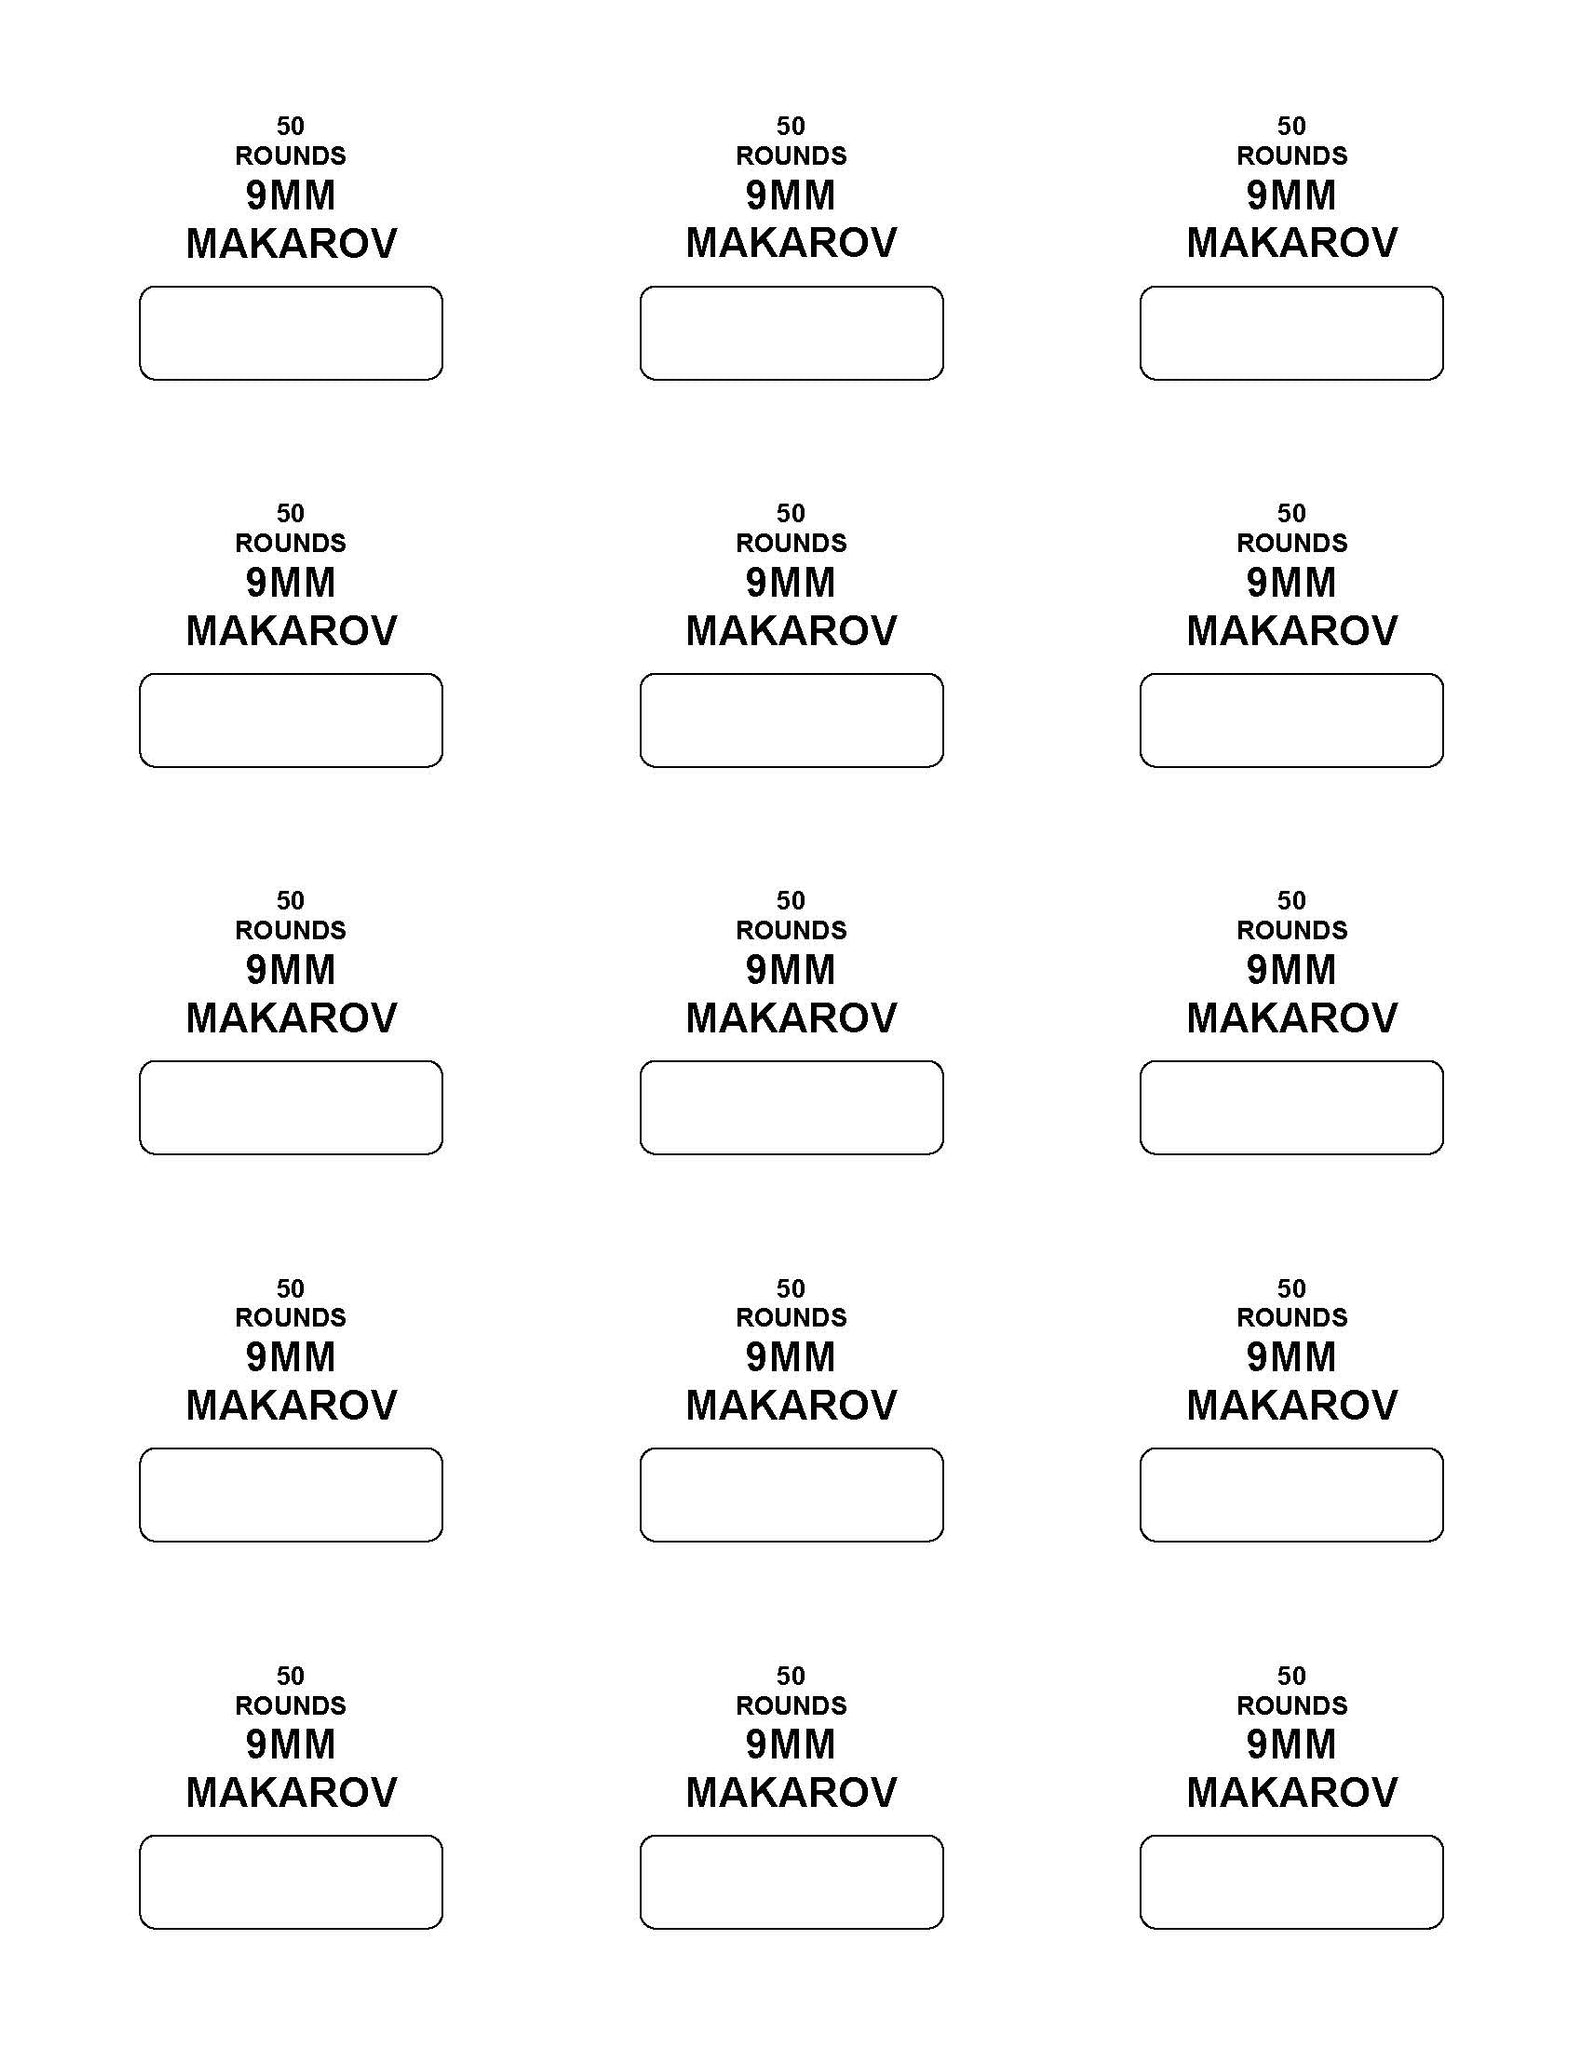 Labels: 9MM Makarov